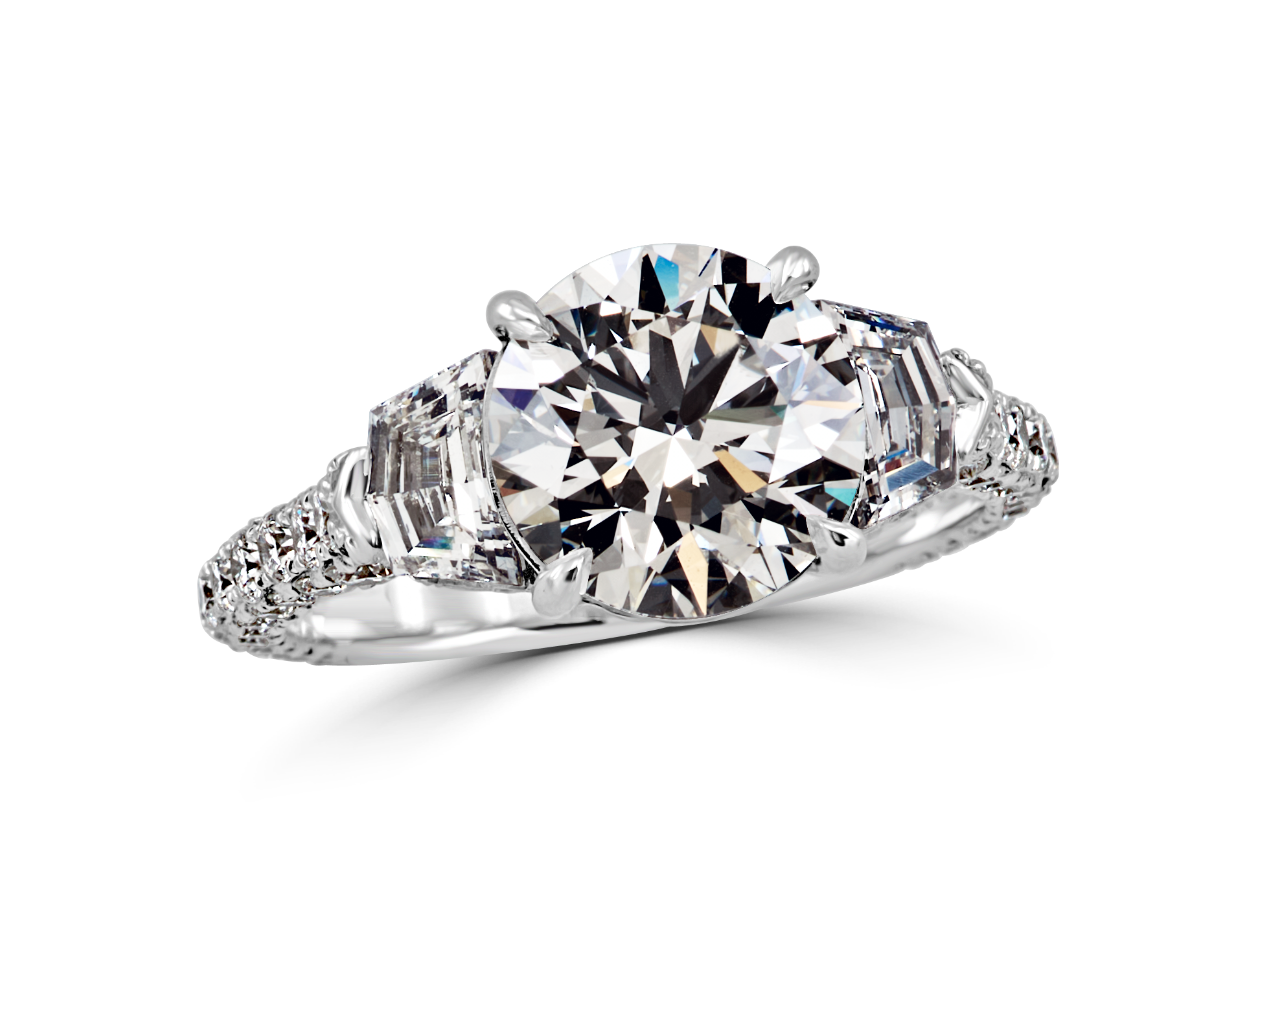 Shield-Shaped Step Cut Light Brown Diamond Ring - 